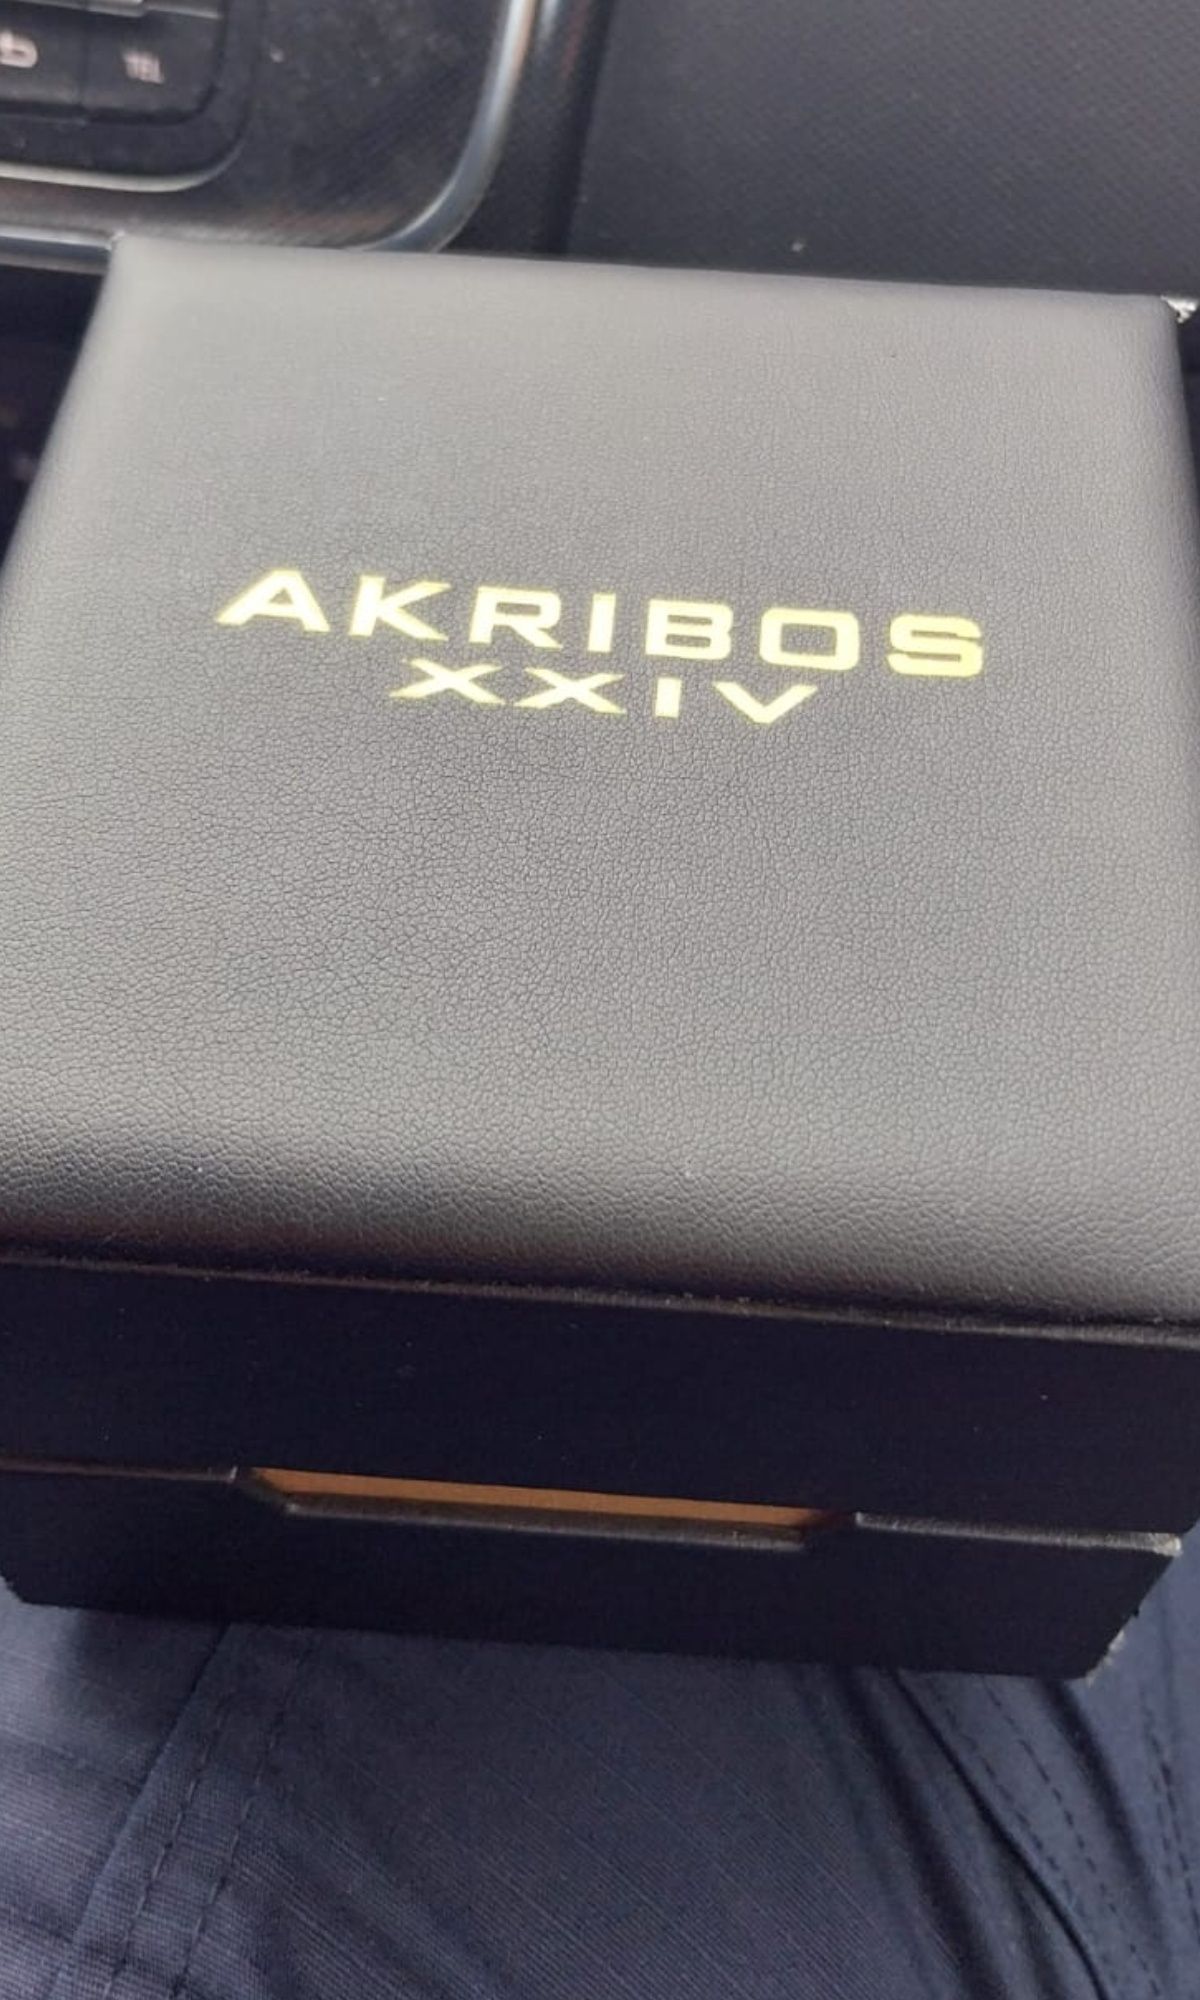 De vânzare ceas Akribos XXIV AK 865 ORIGINAL